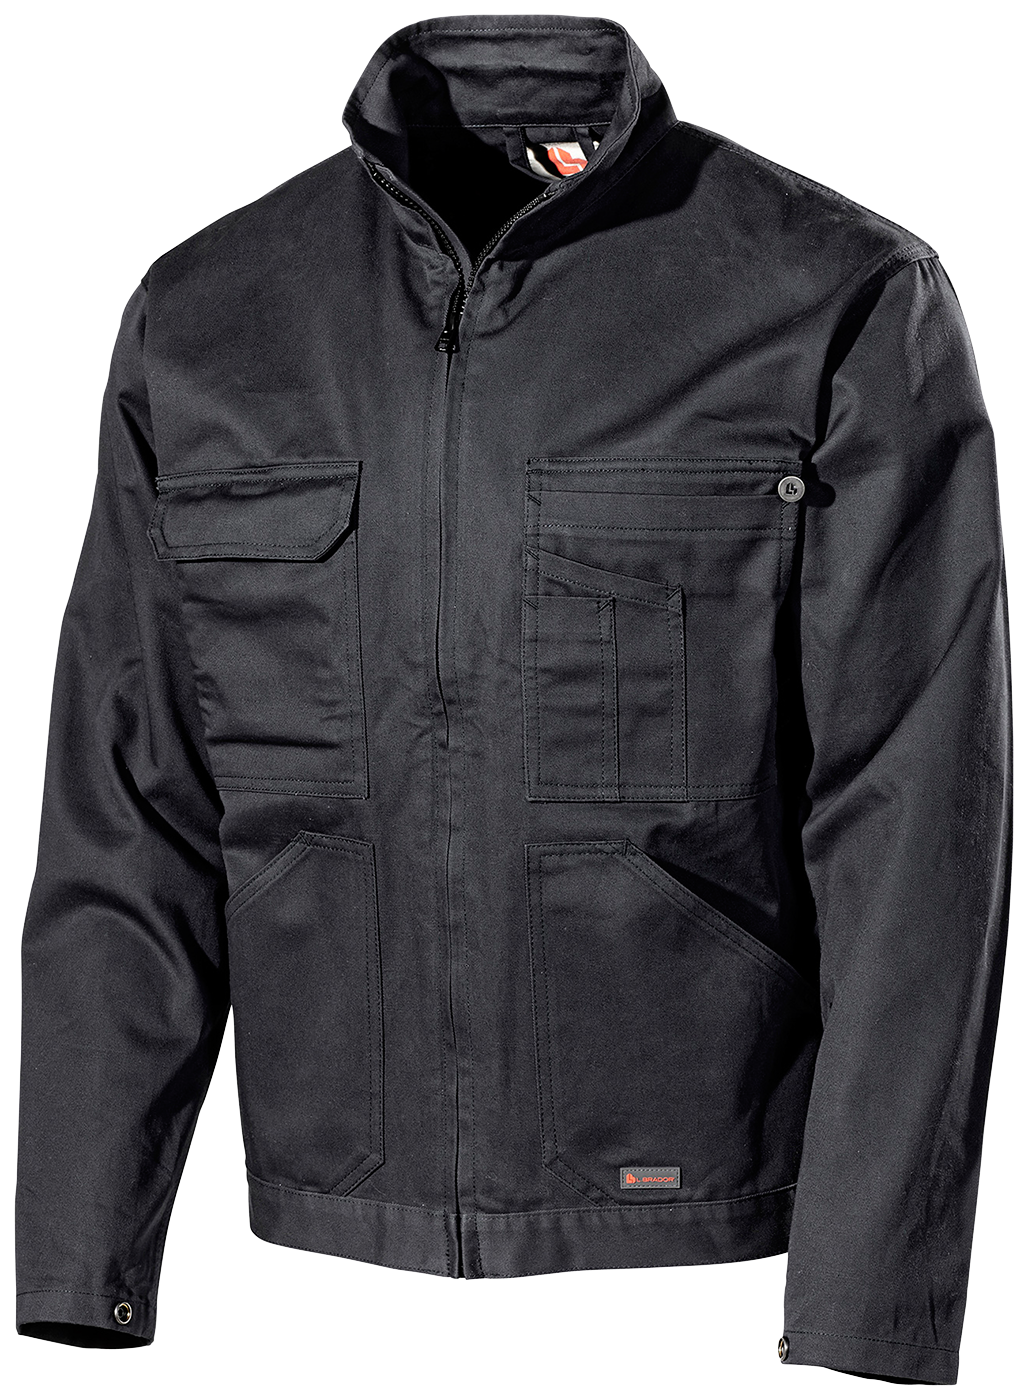 Jacket L.Brador 2021B – L.Brador